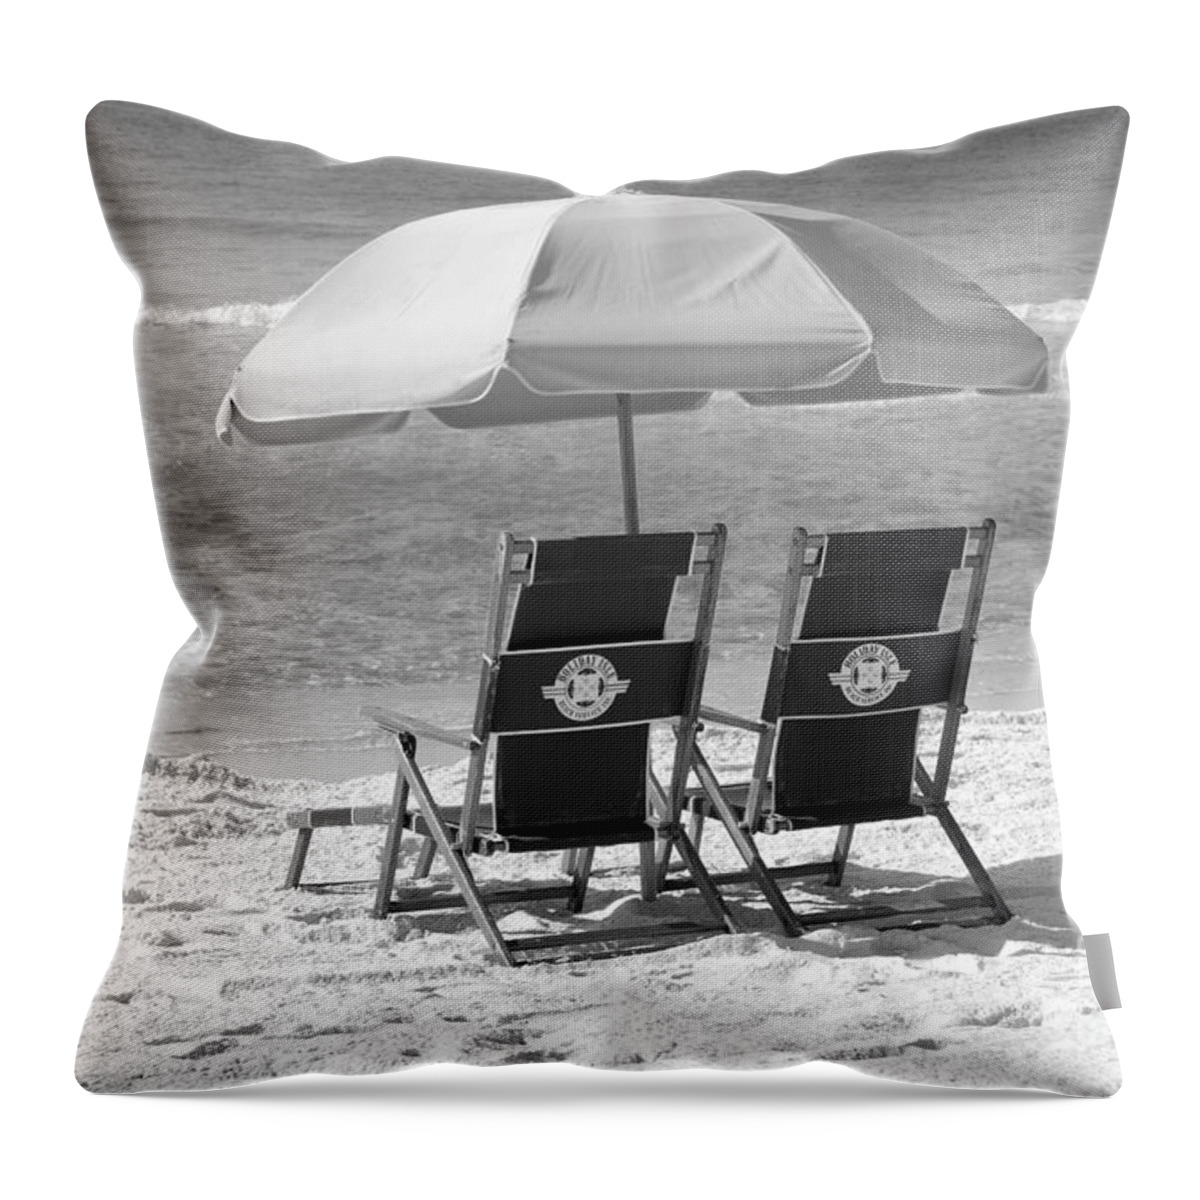 Destin Throw Pillow featuring the photograph Destin Florida Beach Chairs and Umbrella Black and White by Shawn O'Brien